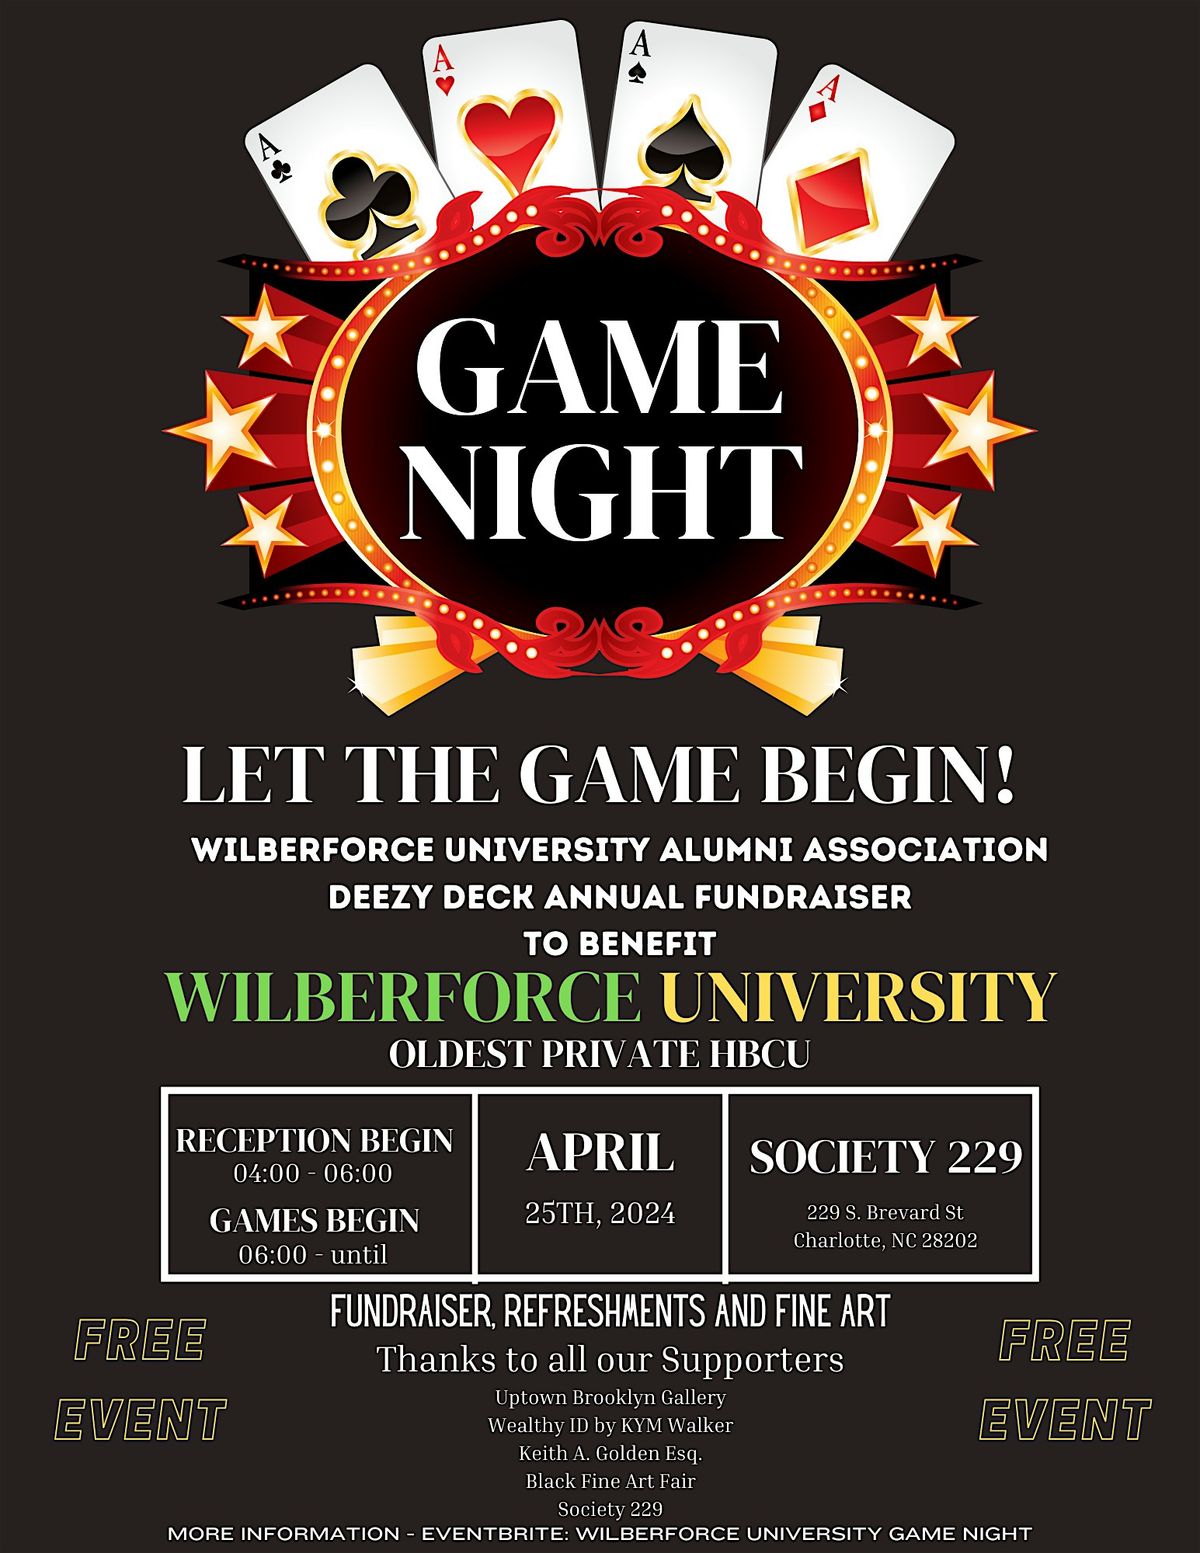 Wilberforce University Game Night Fundraiser